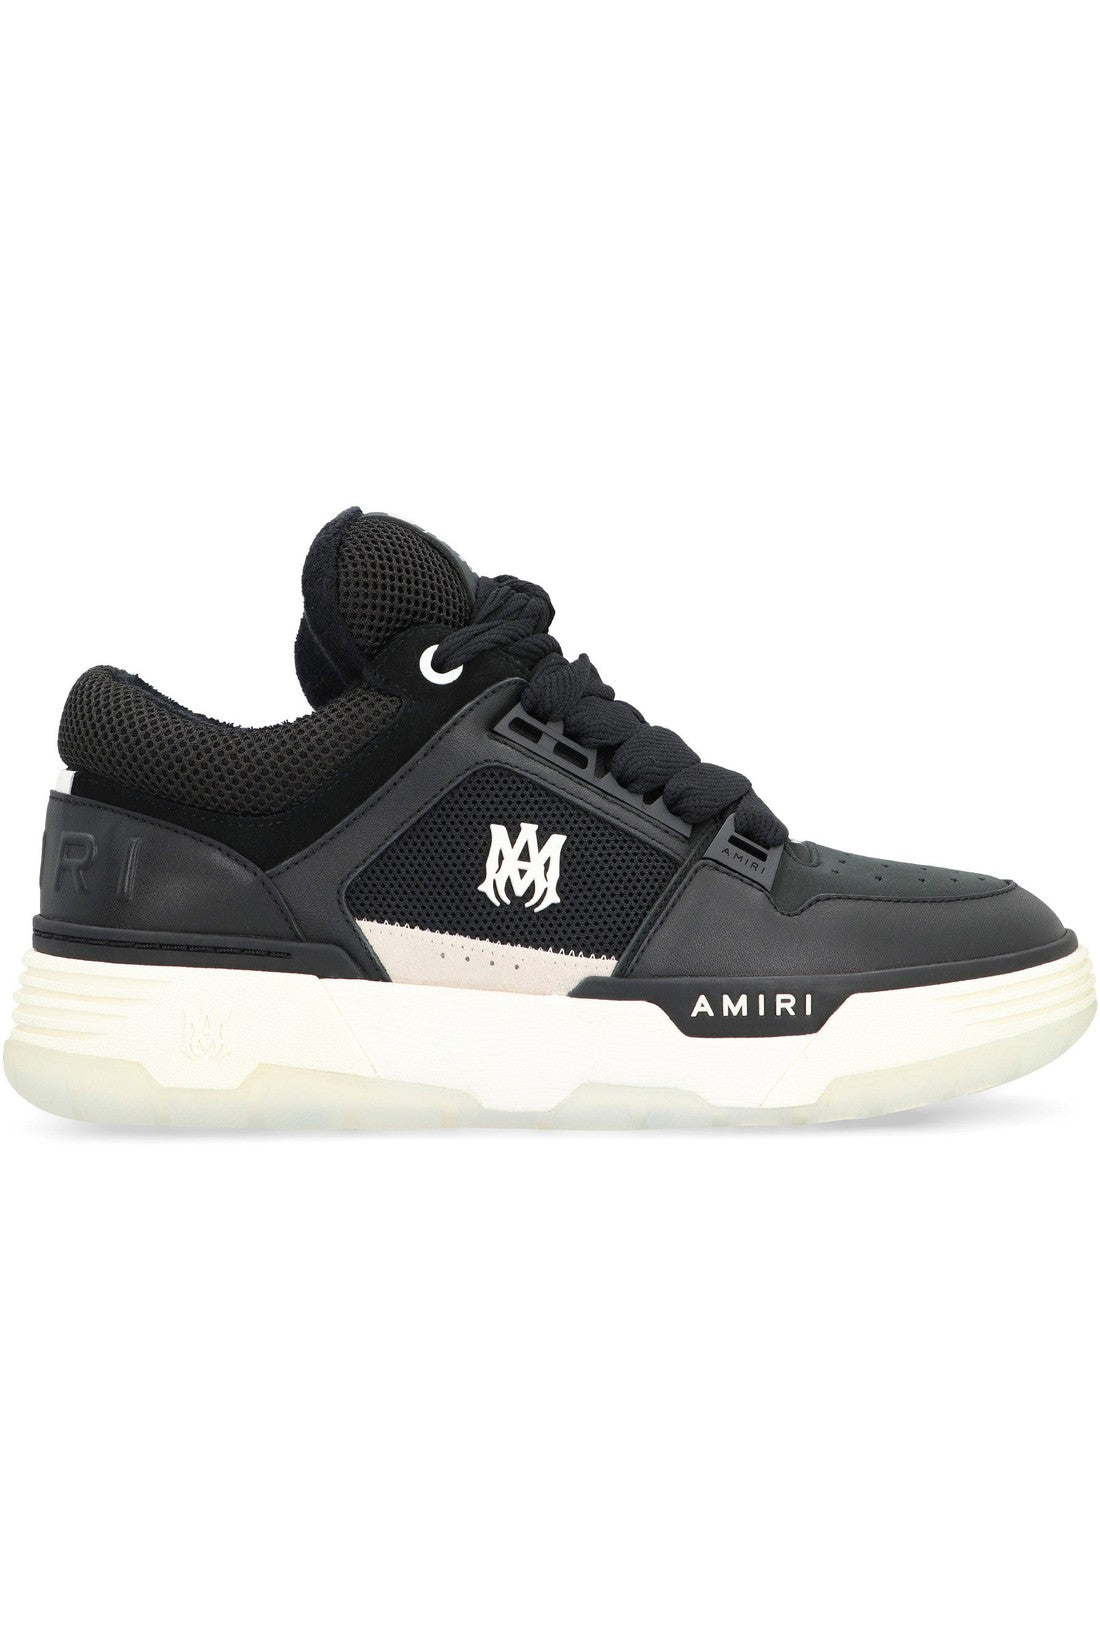 AMIRI-OUTLET-SALE-MA-1 mesh sneakers-ARCHIVIST